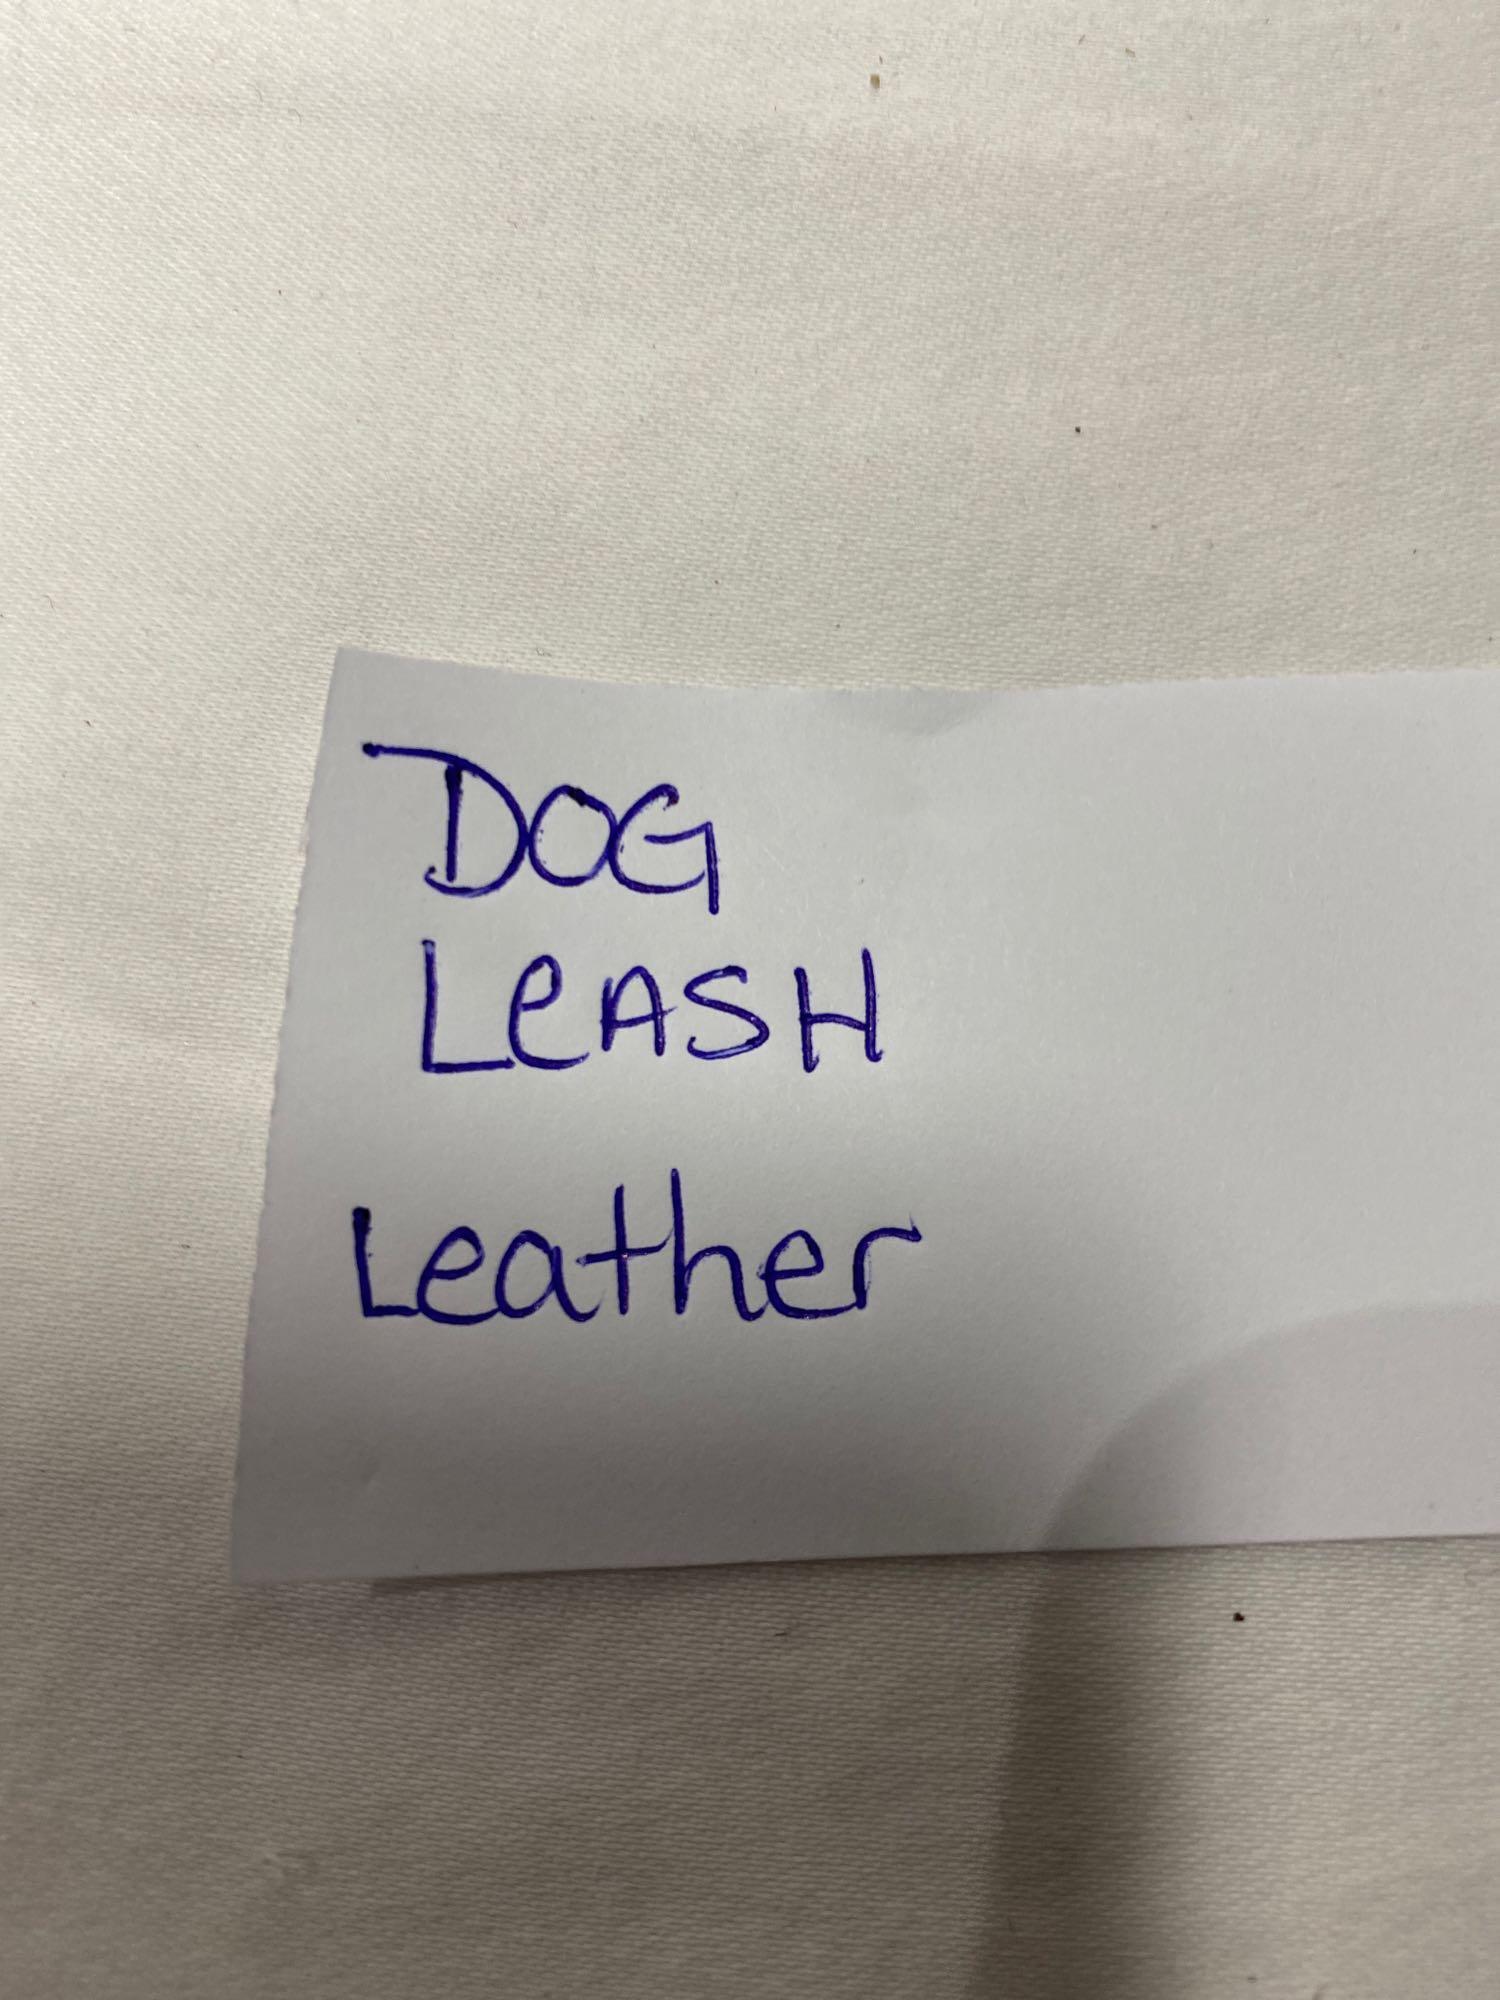 Brown Leather Braided Strap Dog Training Leash 6 Foot Heavy Duty, $30.99 (BRAND NEW)